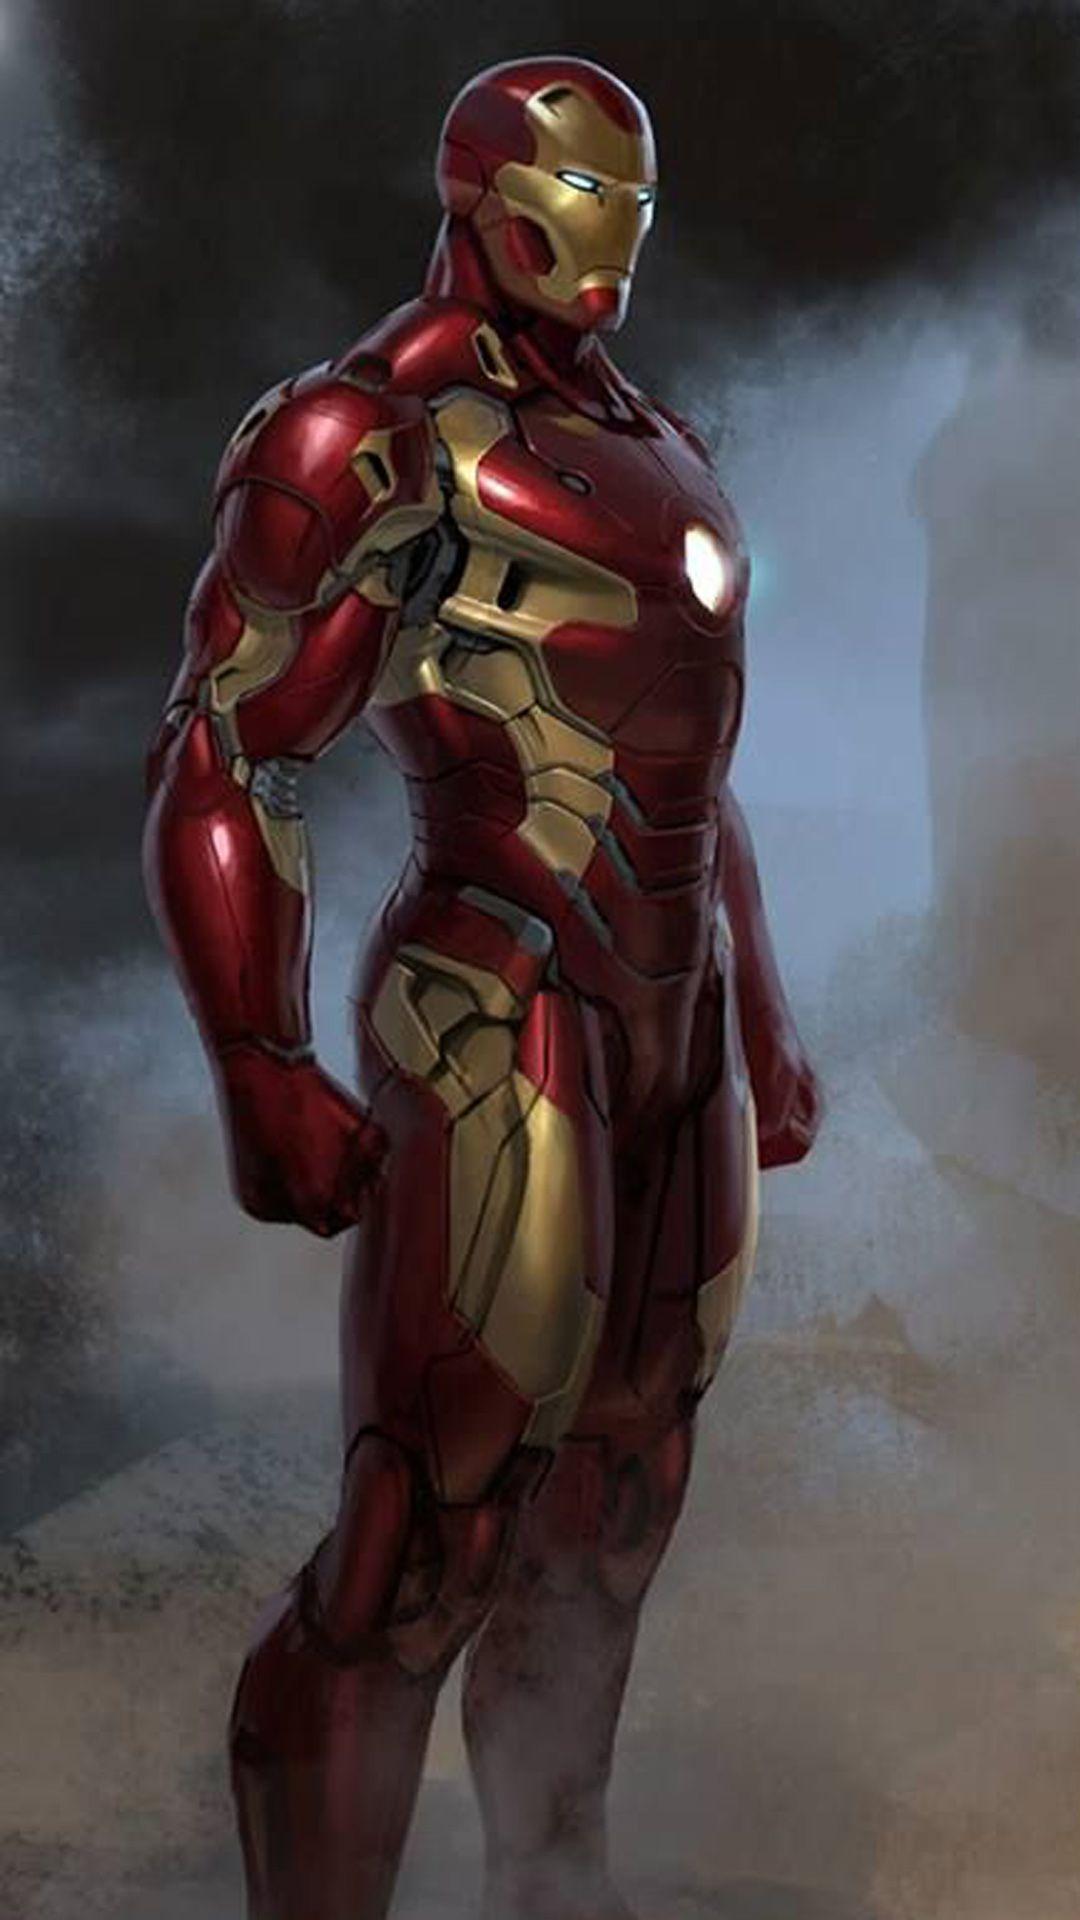 Cool Iron Man pics.jpg